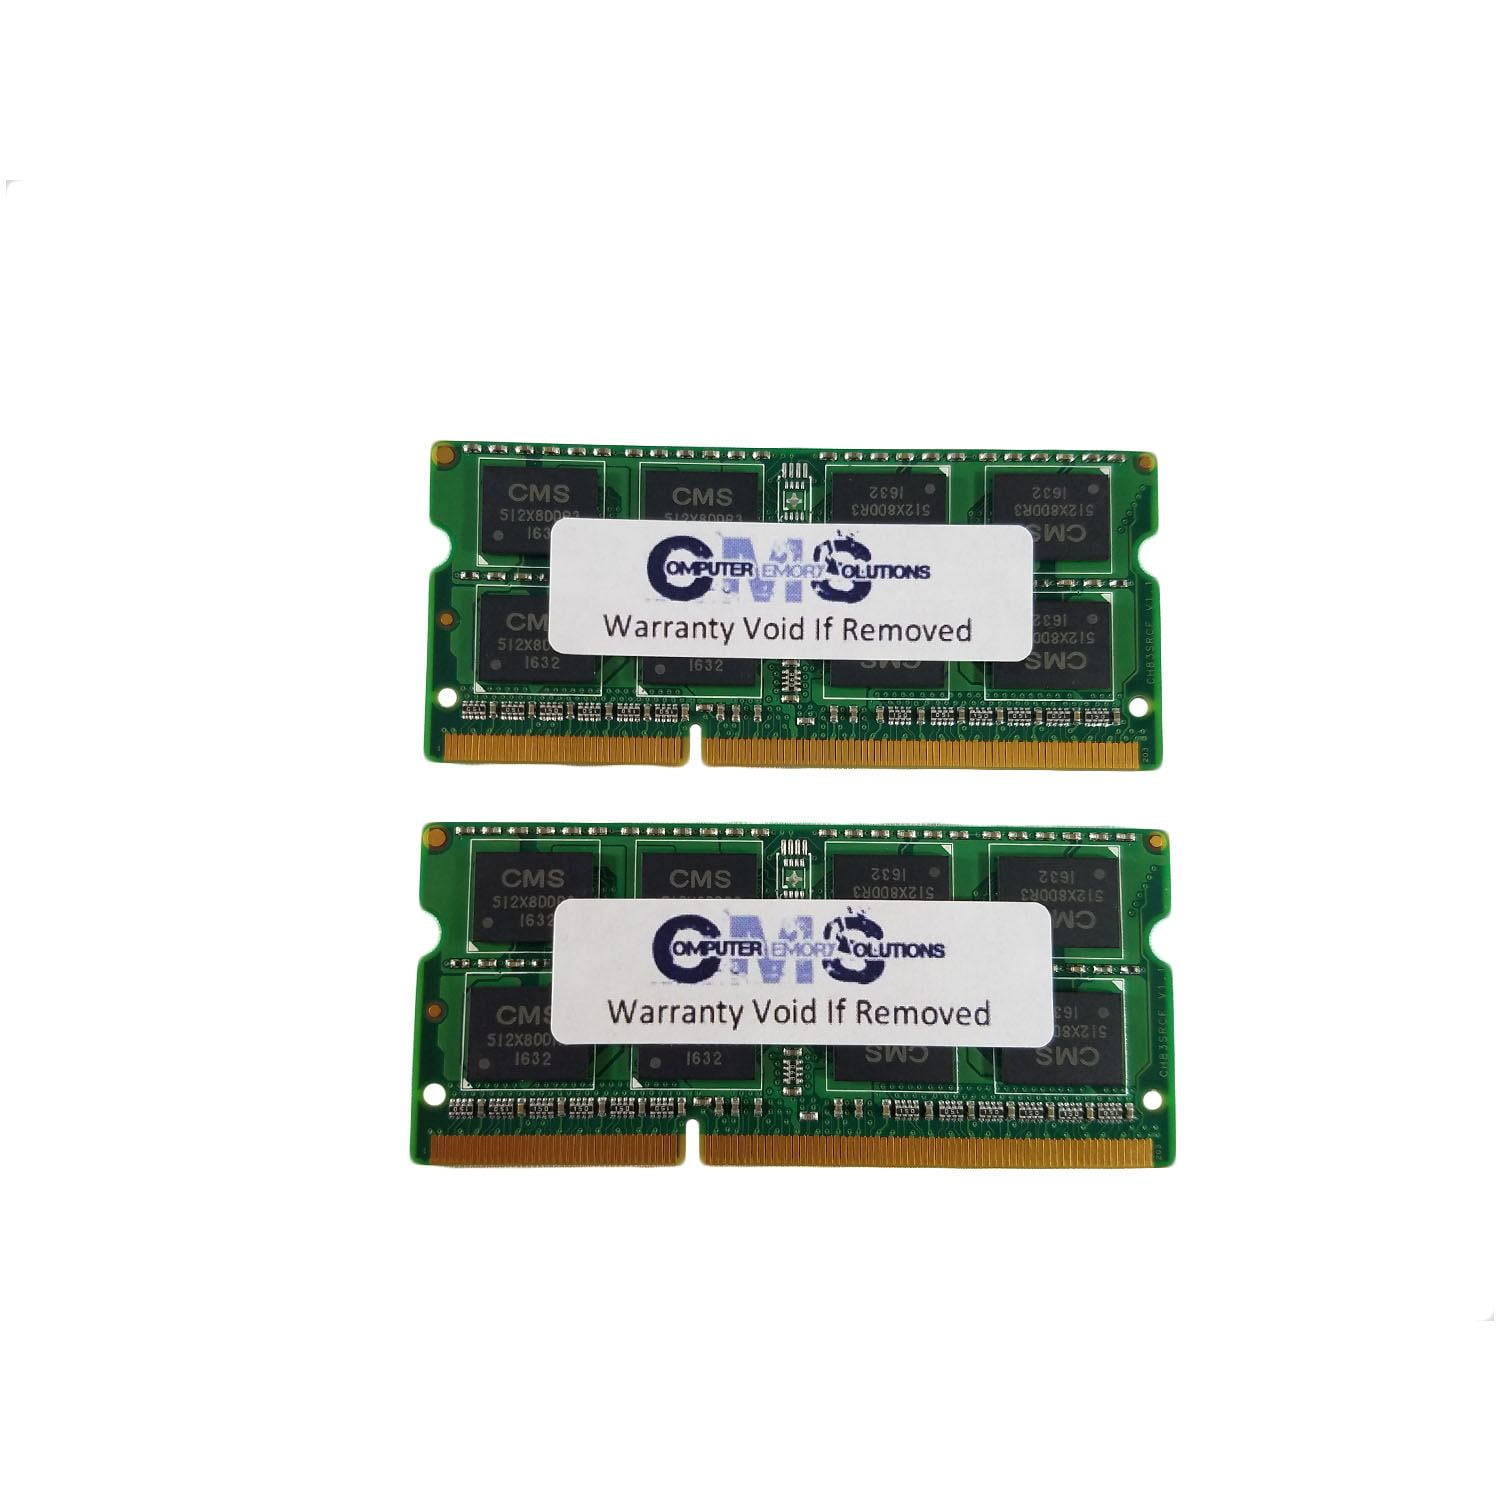 DDR3/DDR3L 1600MHz SODIMM PC3L-12800 204-Pin Non-ECC Unbuffered Max Memory Upgrade Kit A-Tech 16GB RAM for Dell Inspiron 3662 Desktop 2x8GB 